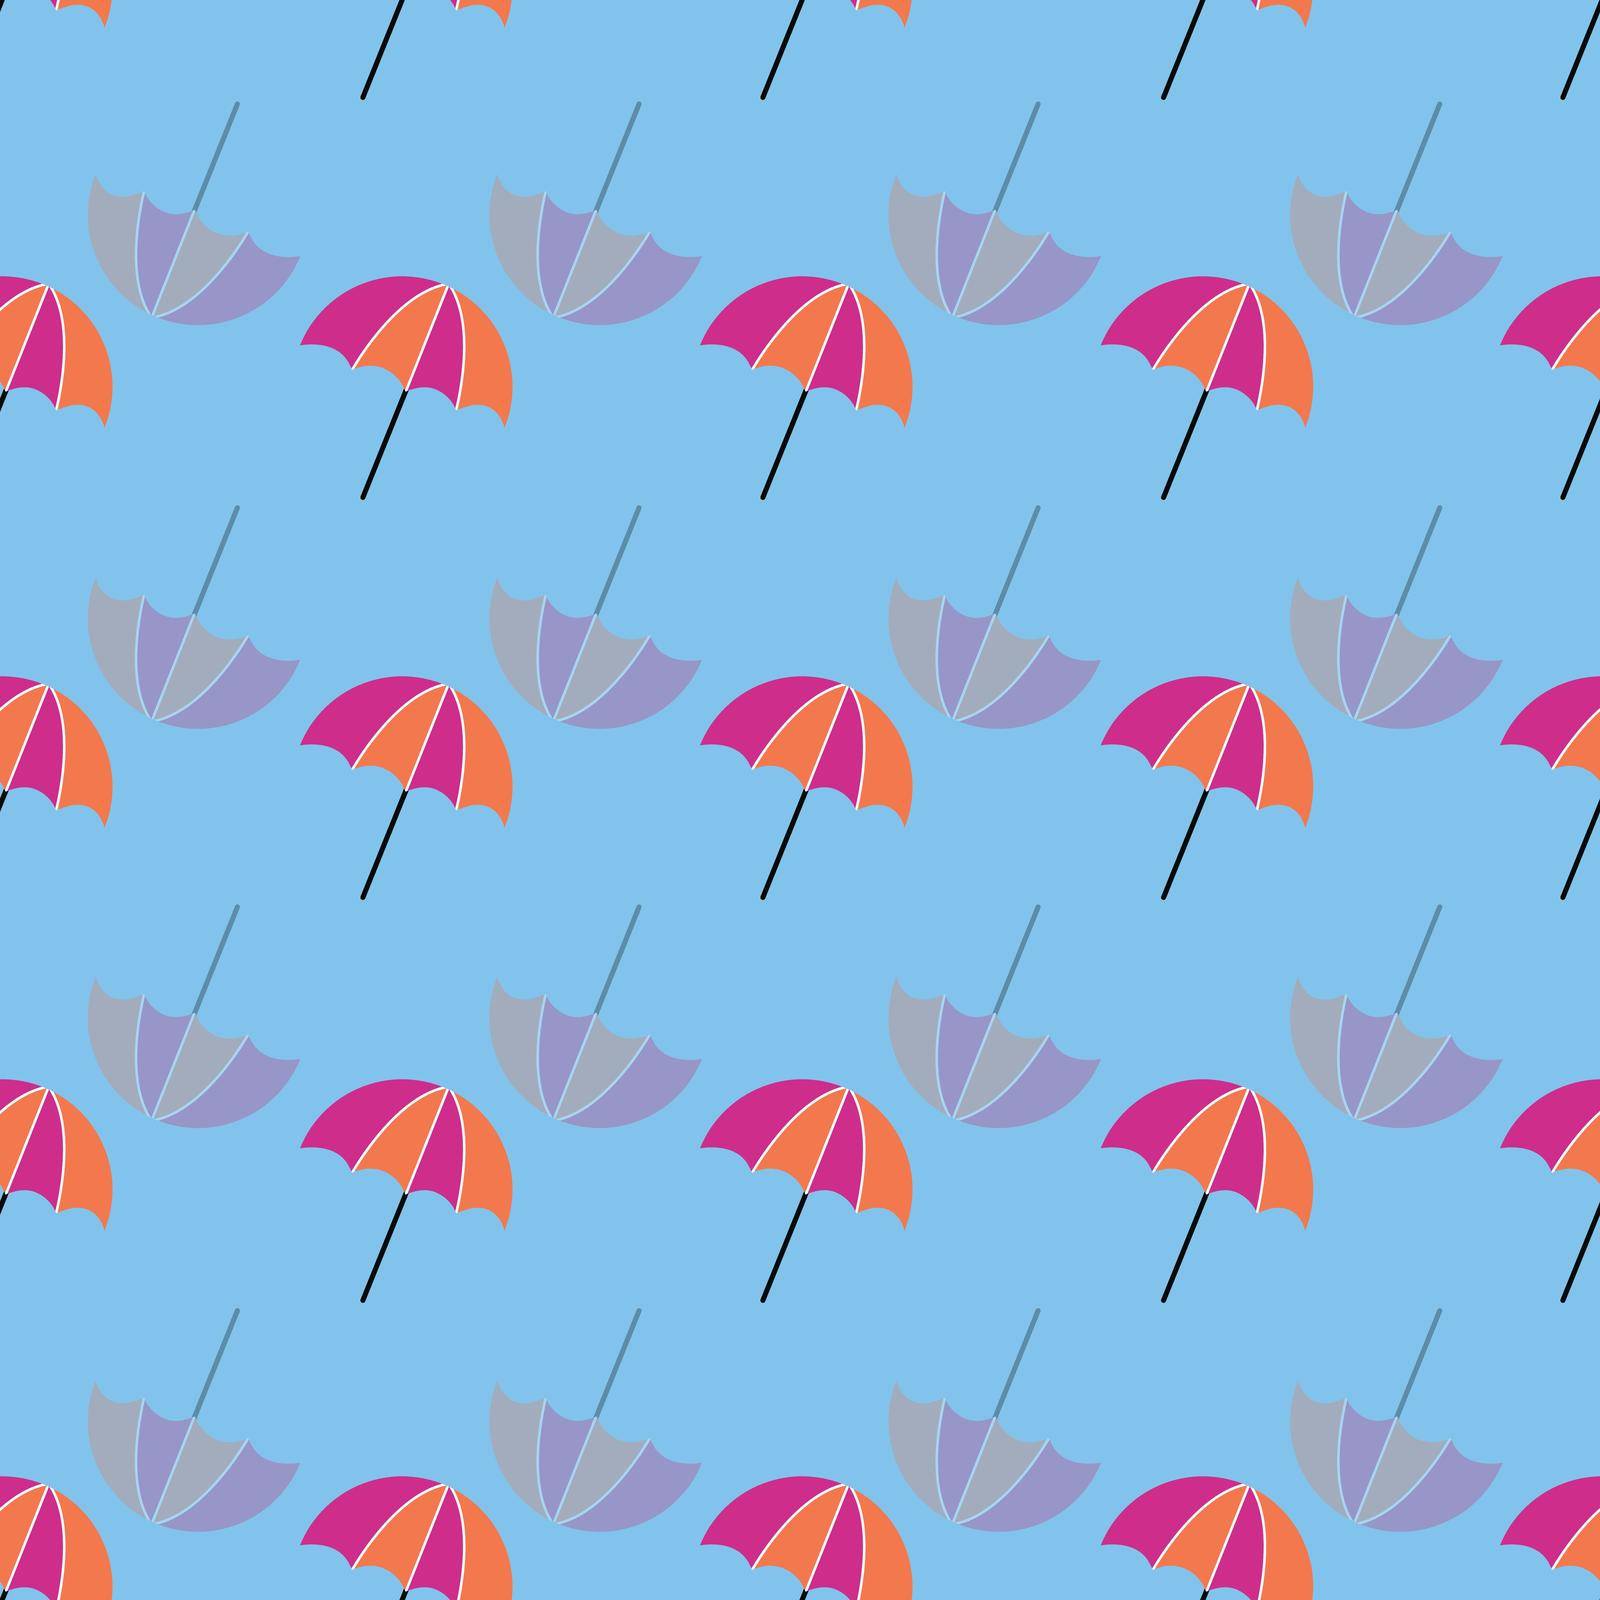 Red umbrella vector repeat pattern winter design by elinnet